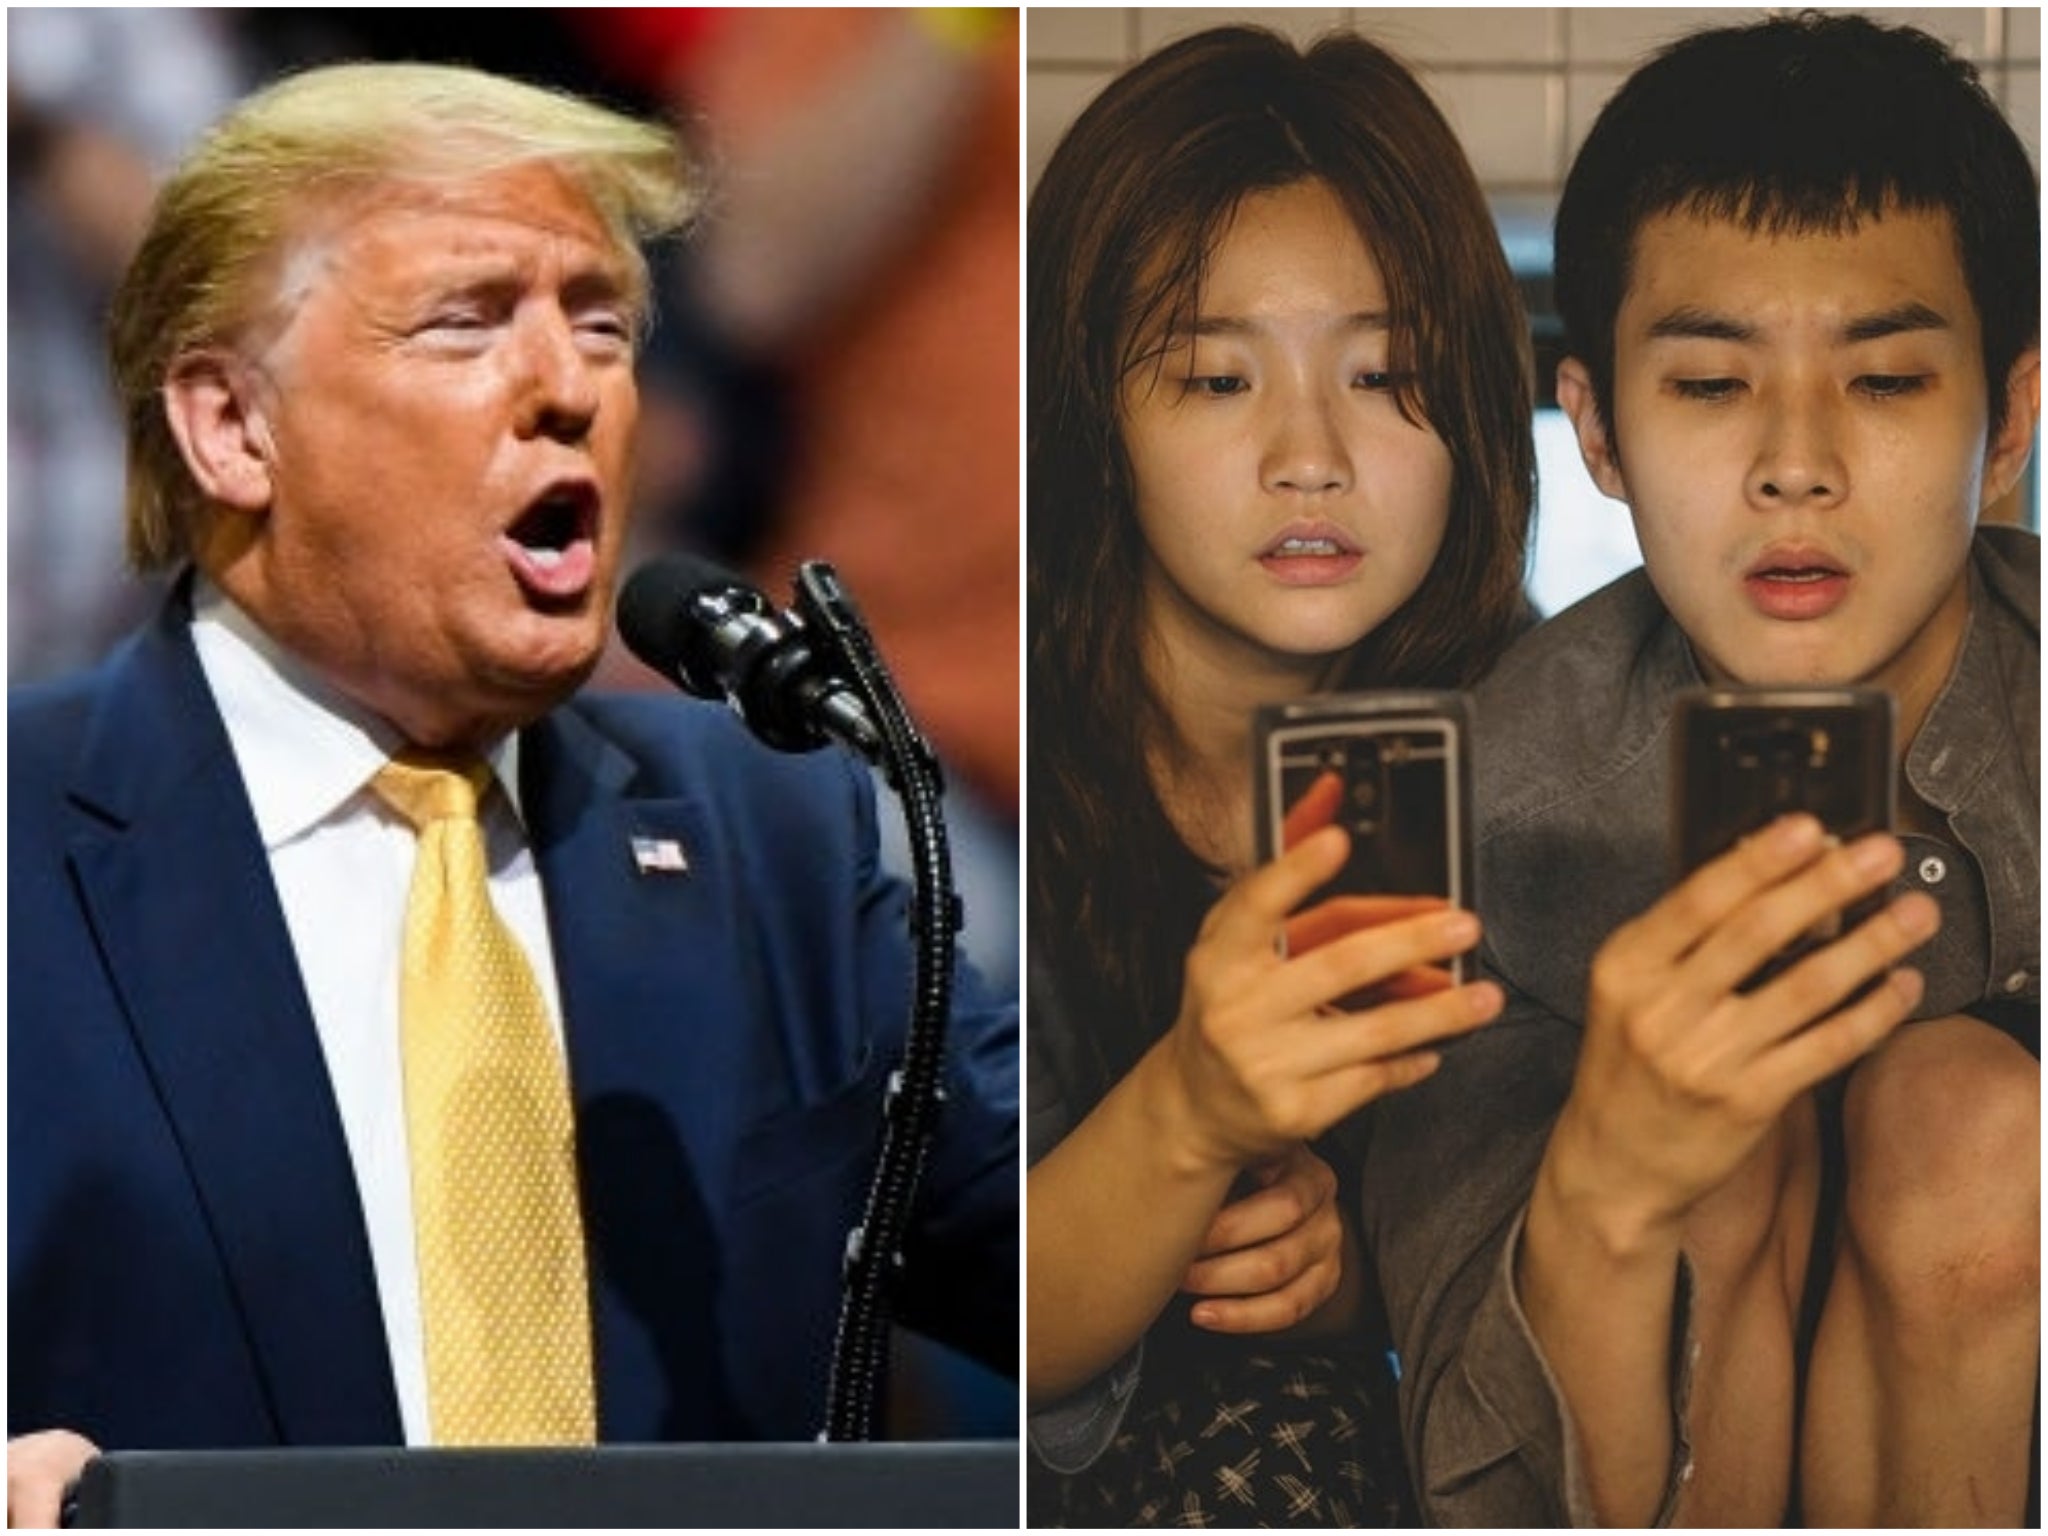 Not a fan: Donald Trump at his Colorado rally, and Parasite stars Park So-dam and Choi Woo-shik